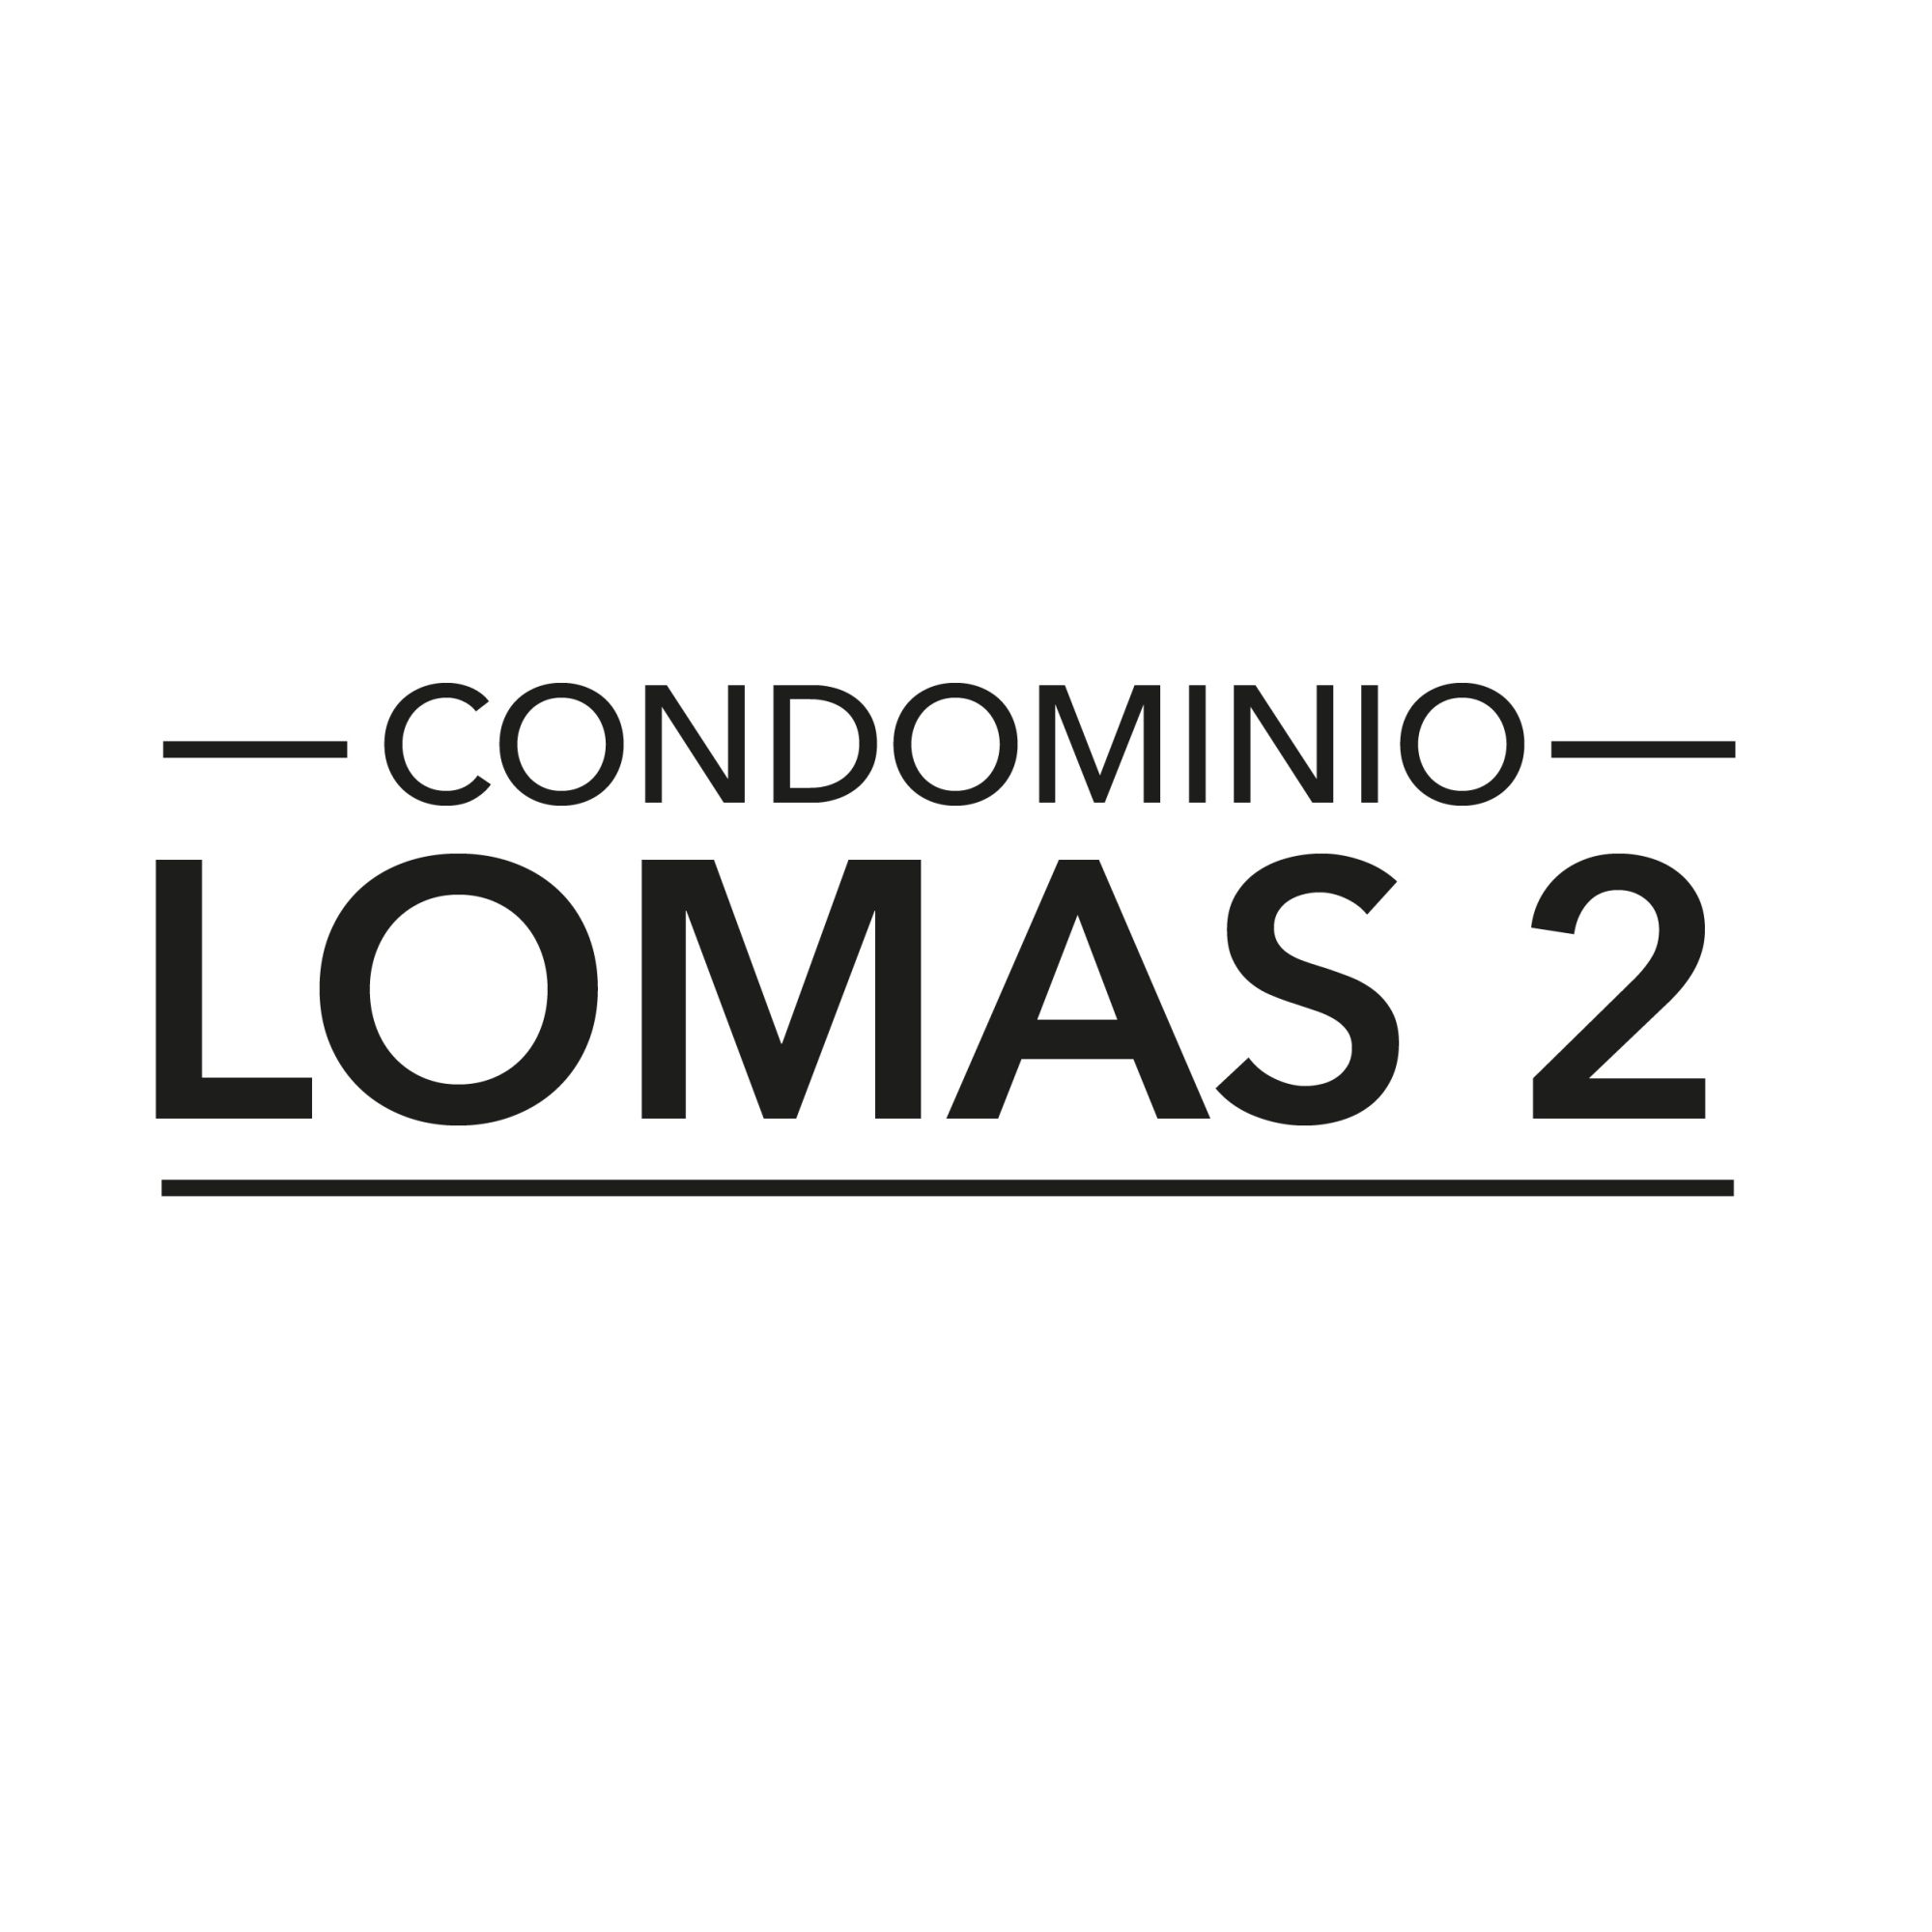 Condominio Lomas 2